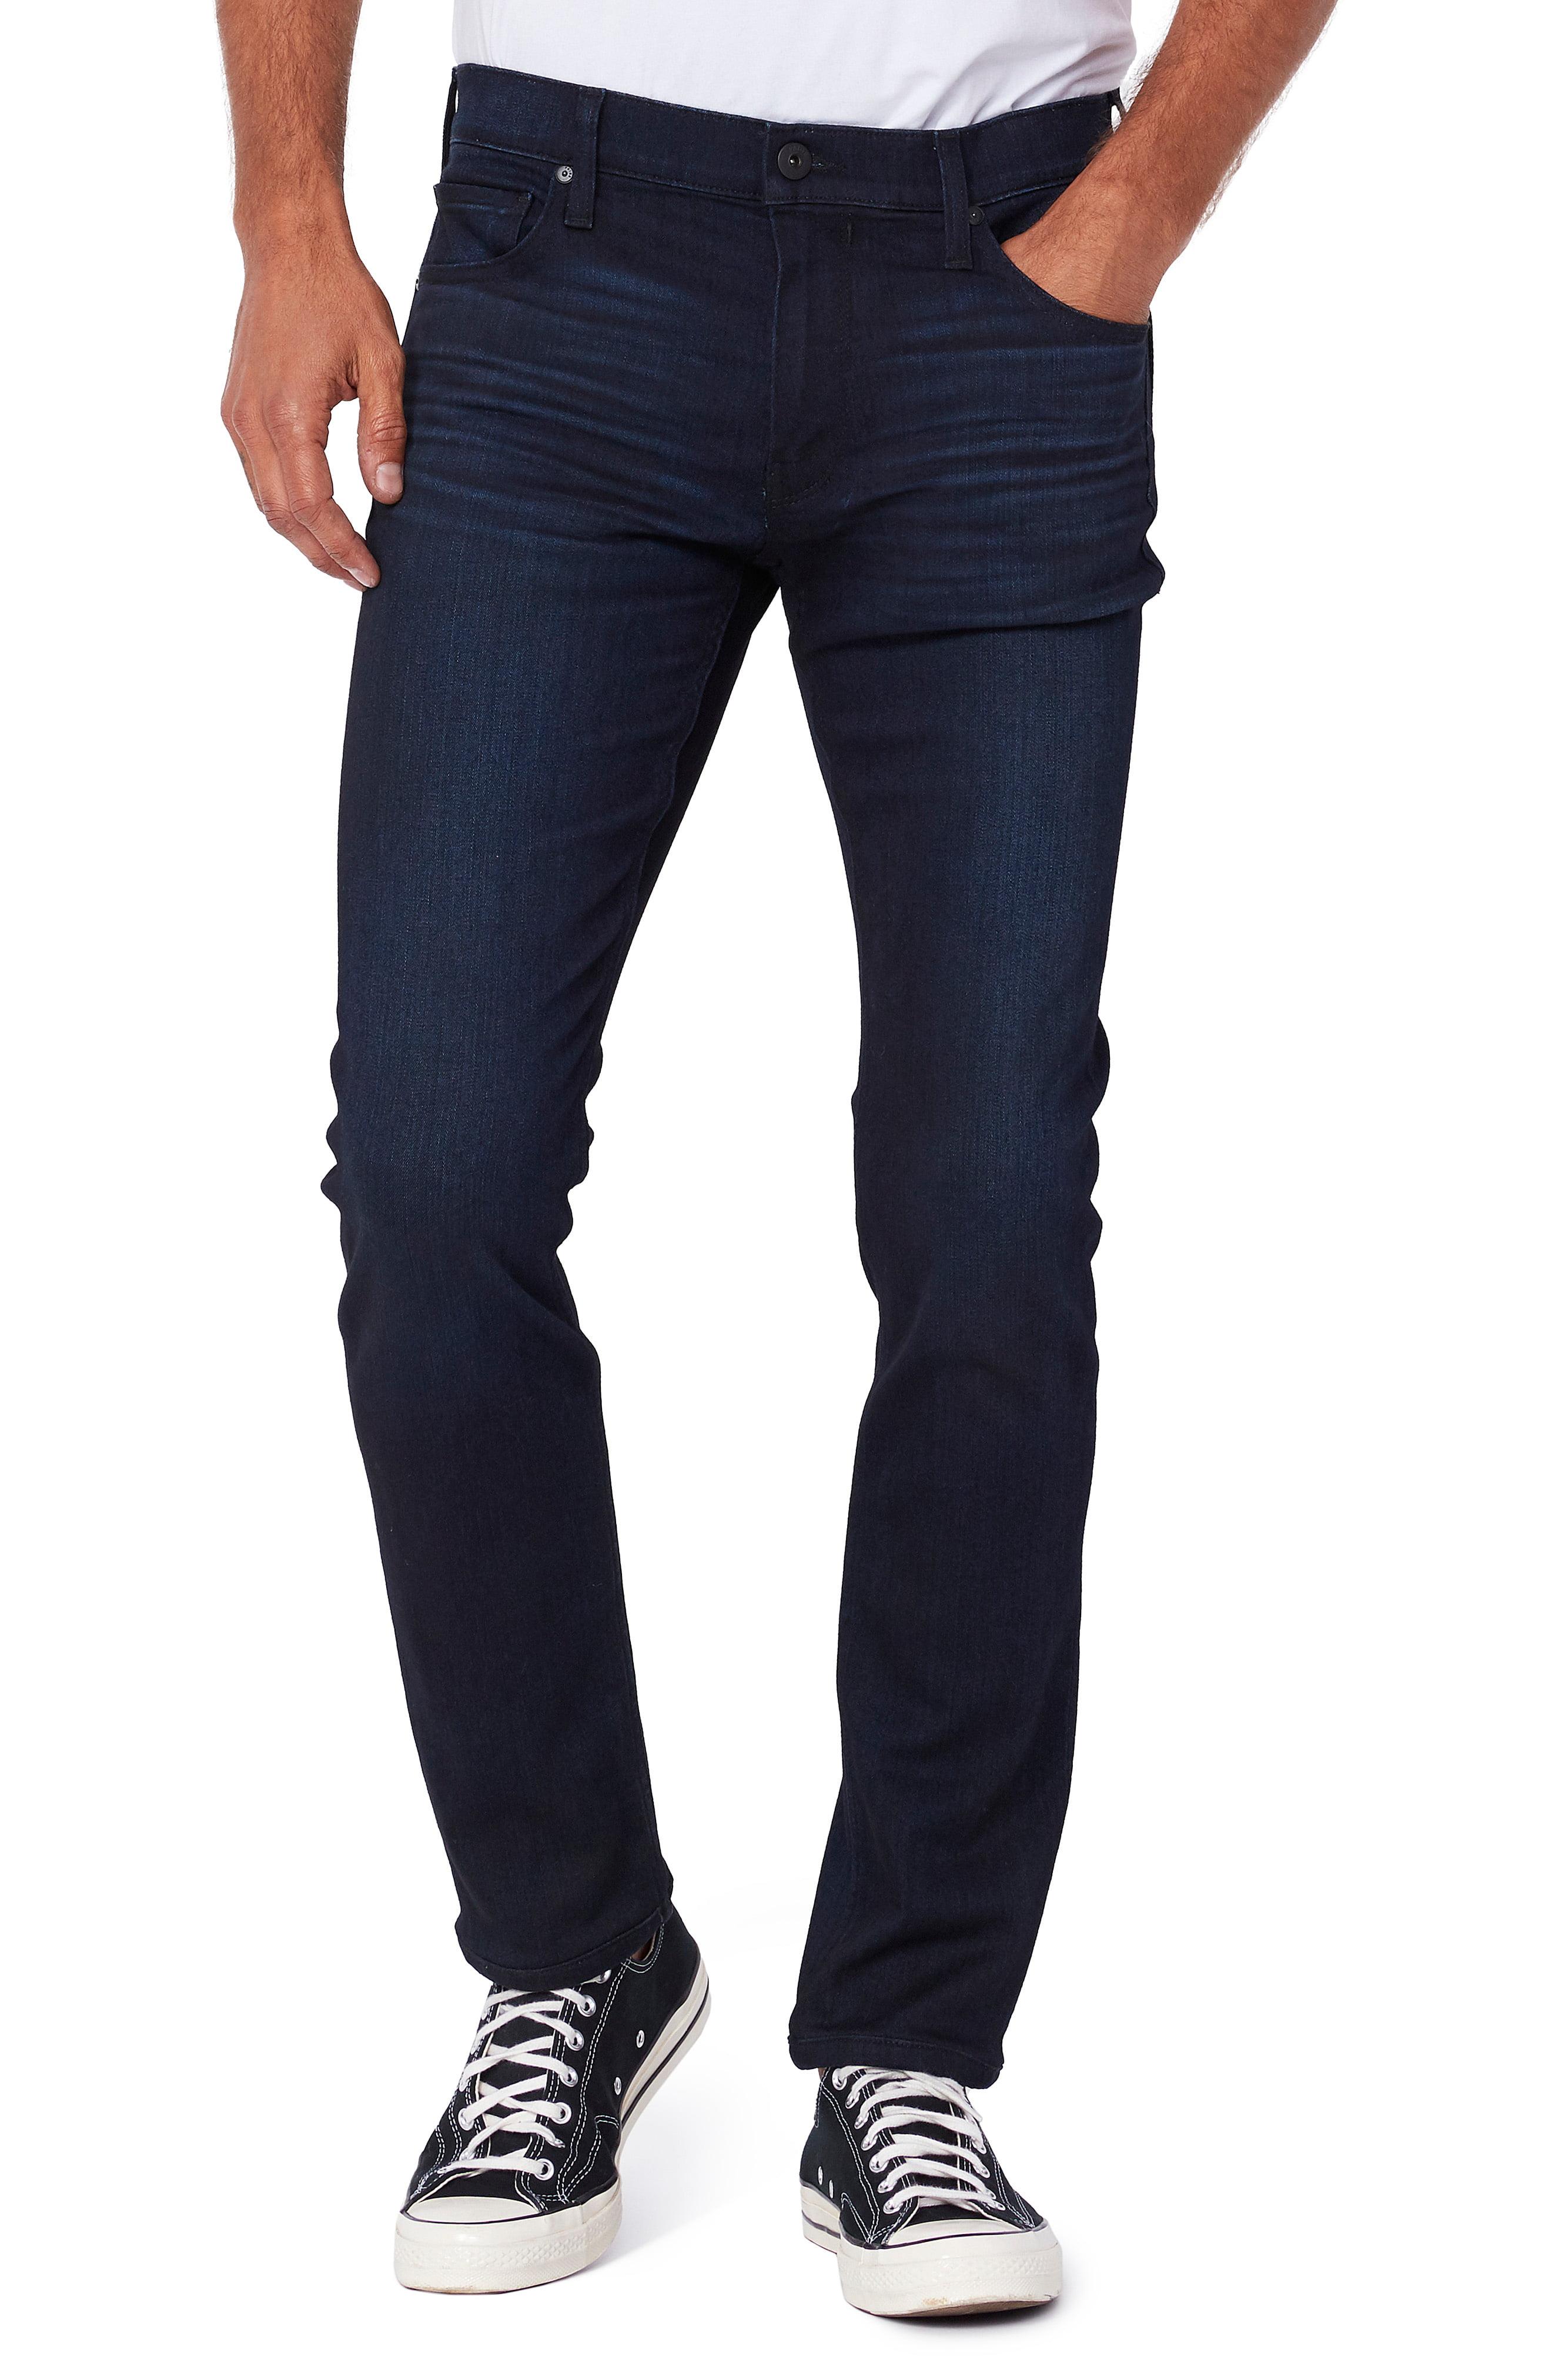 PAIGE Denim Transcend Lennox Slim Fit Jeans in Blue for Men - Lyst